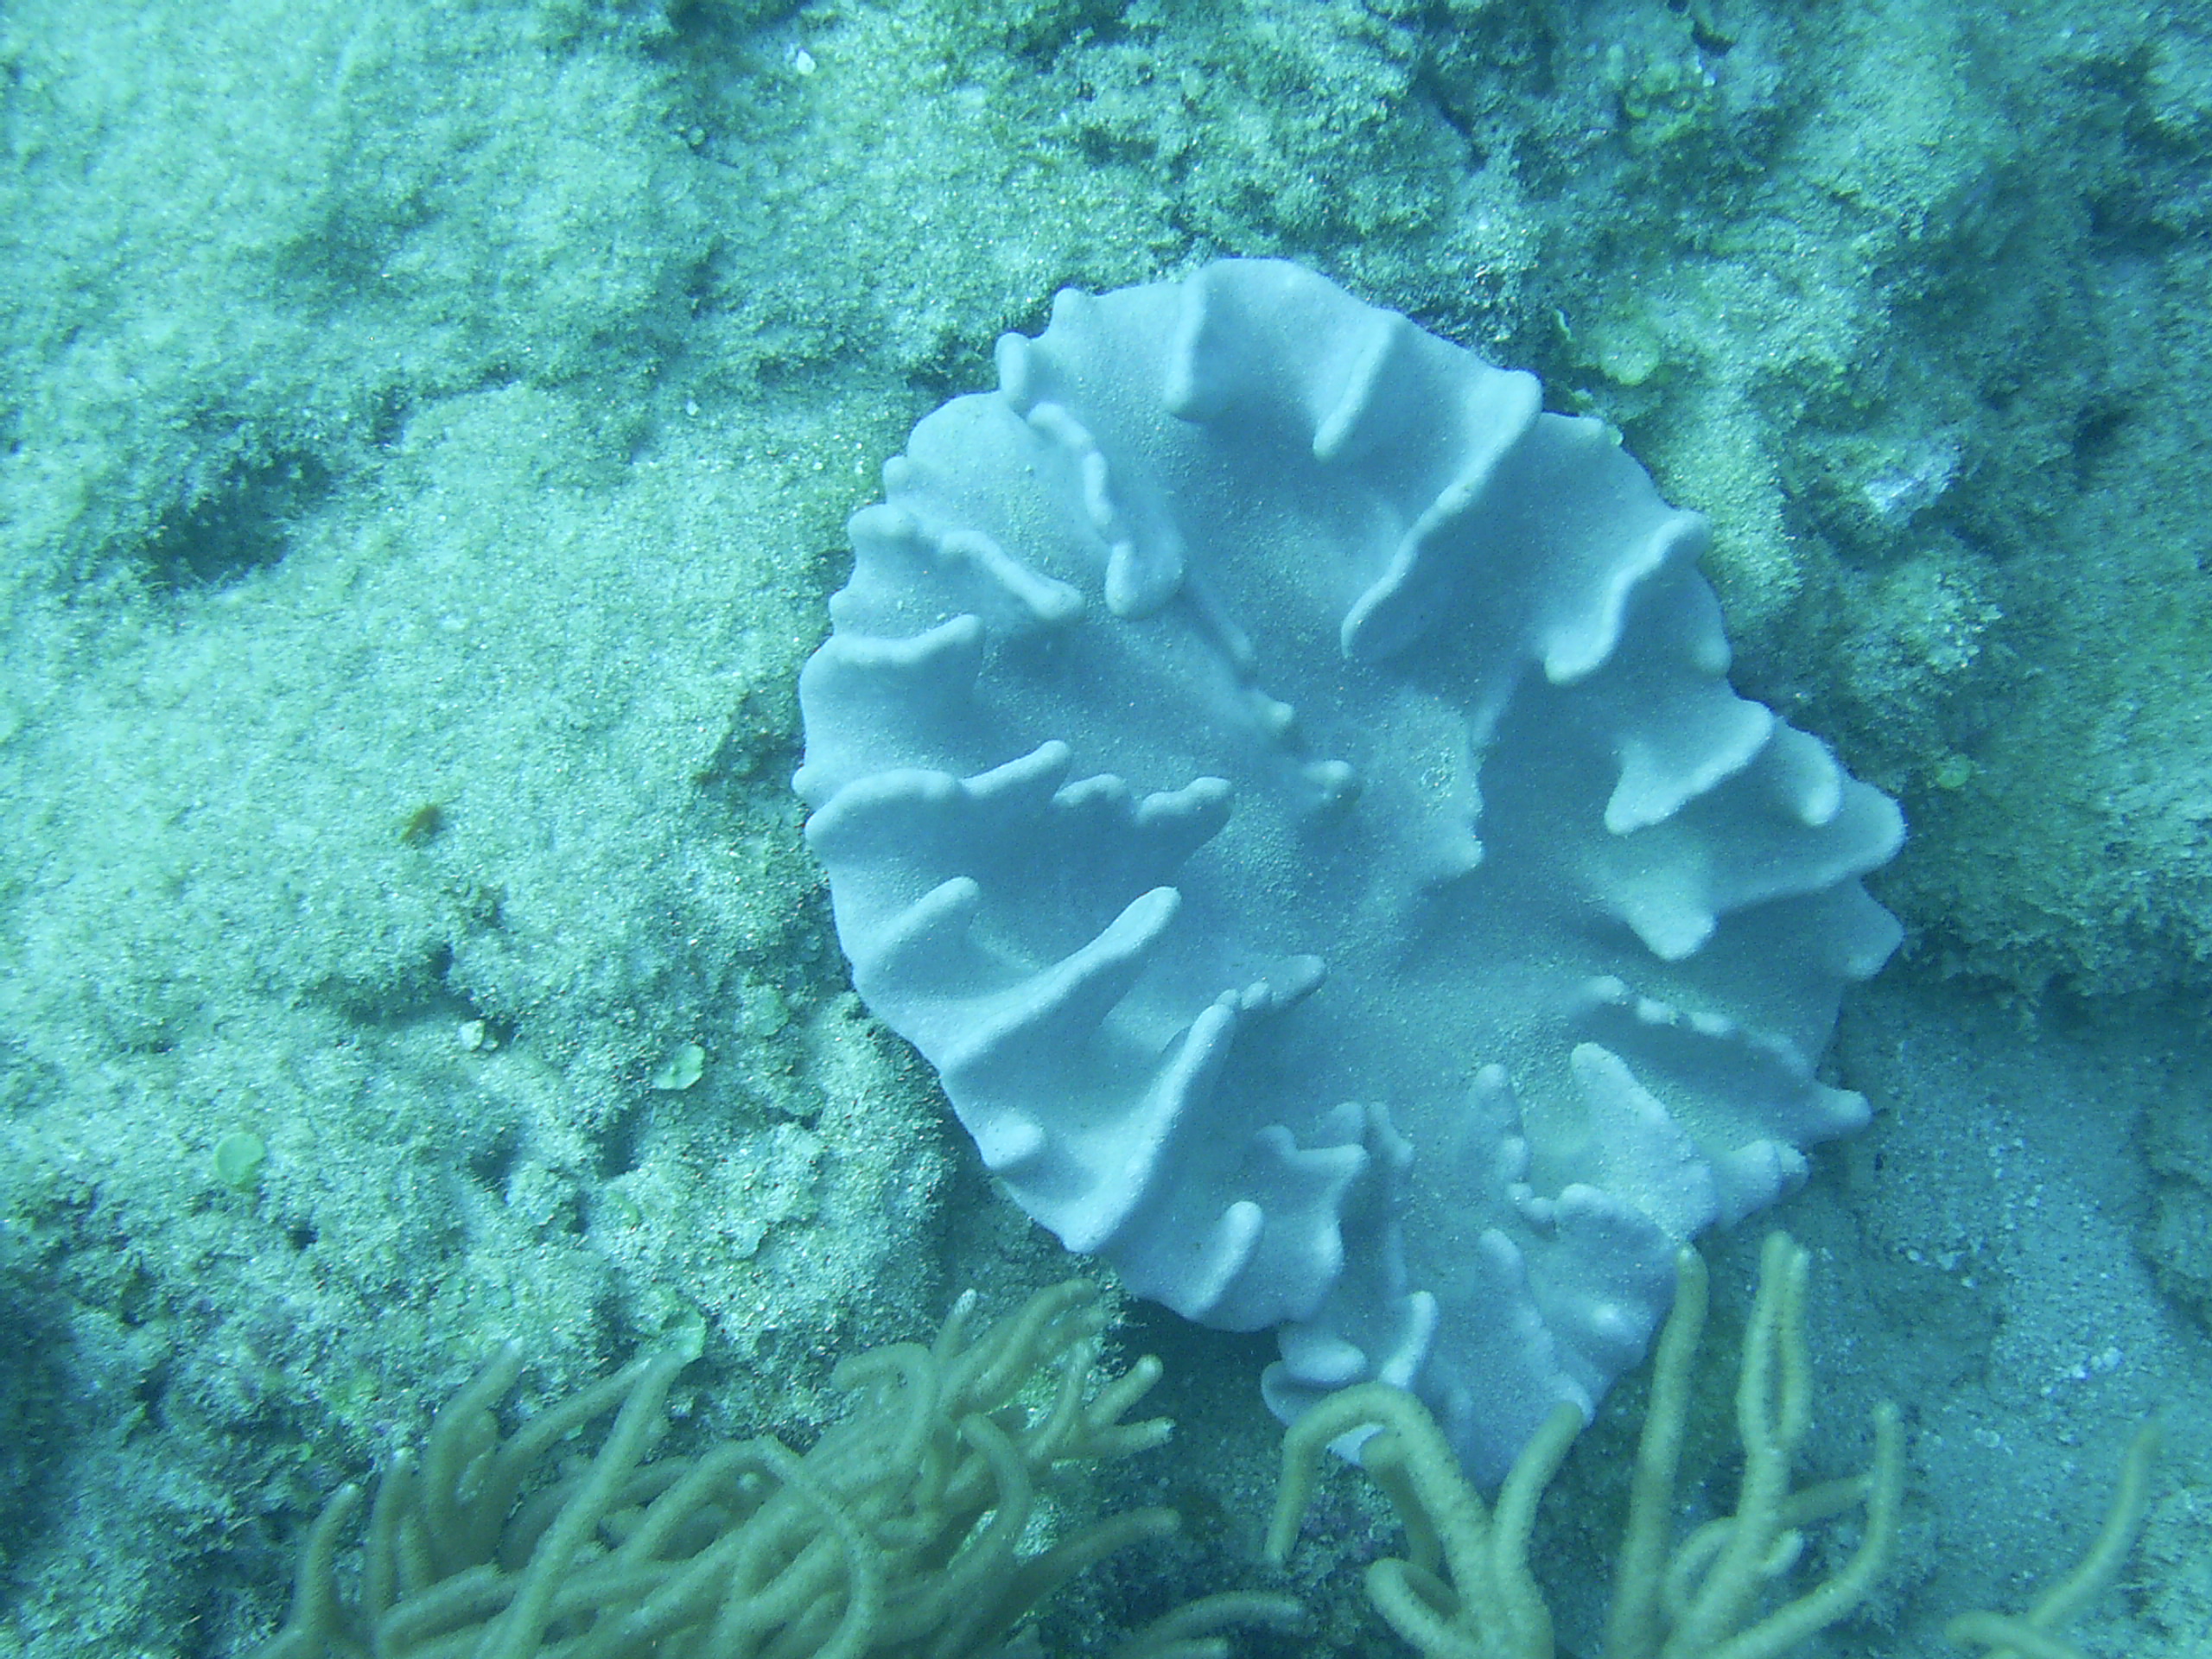 Coral life at Kadena